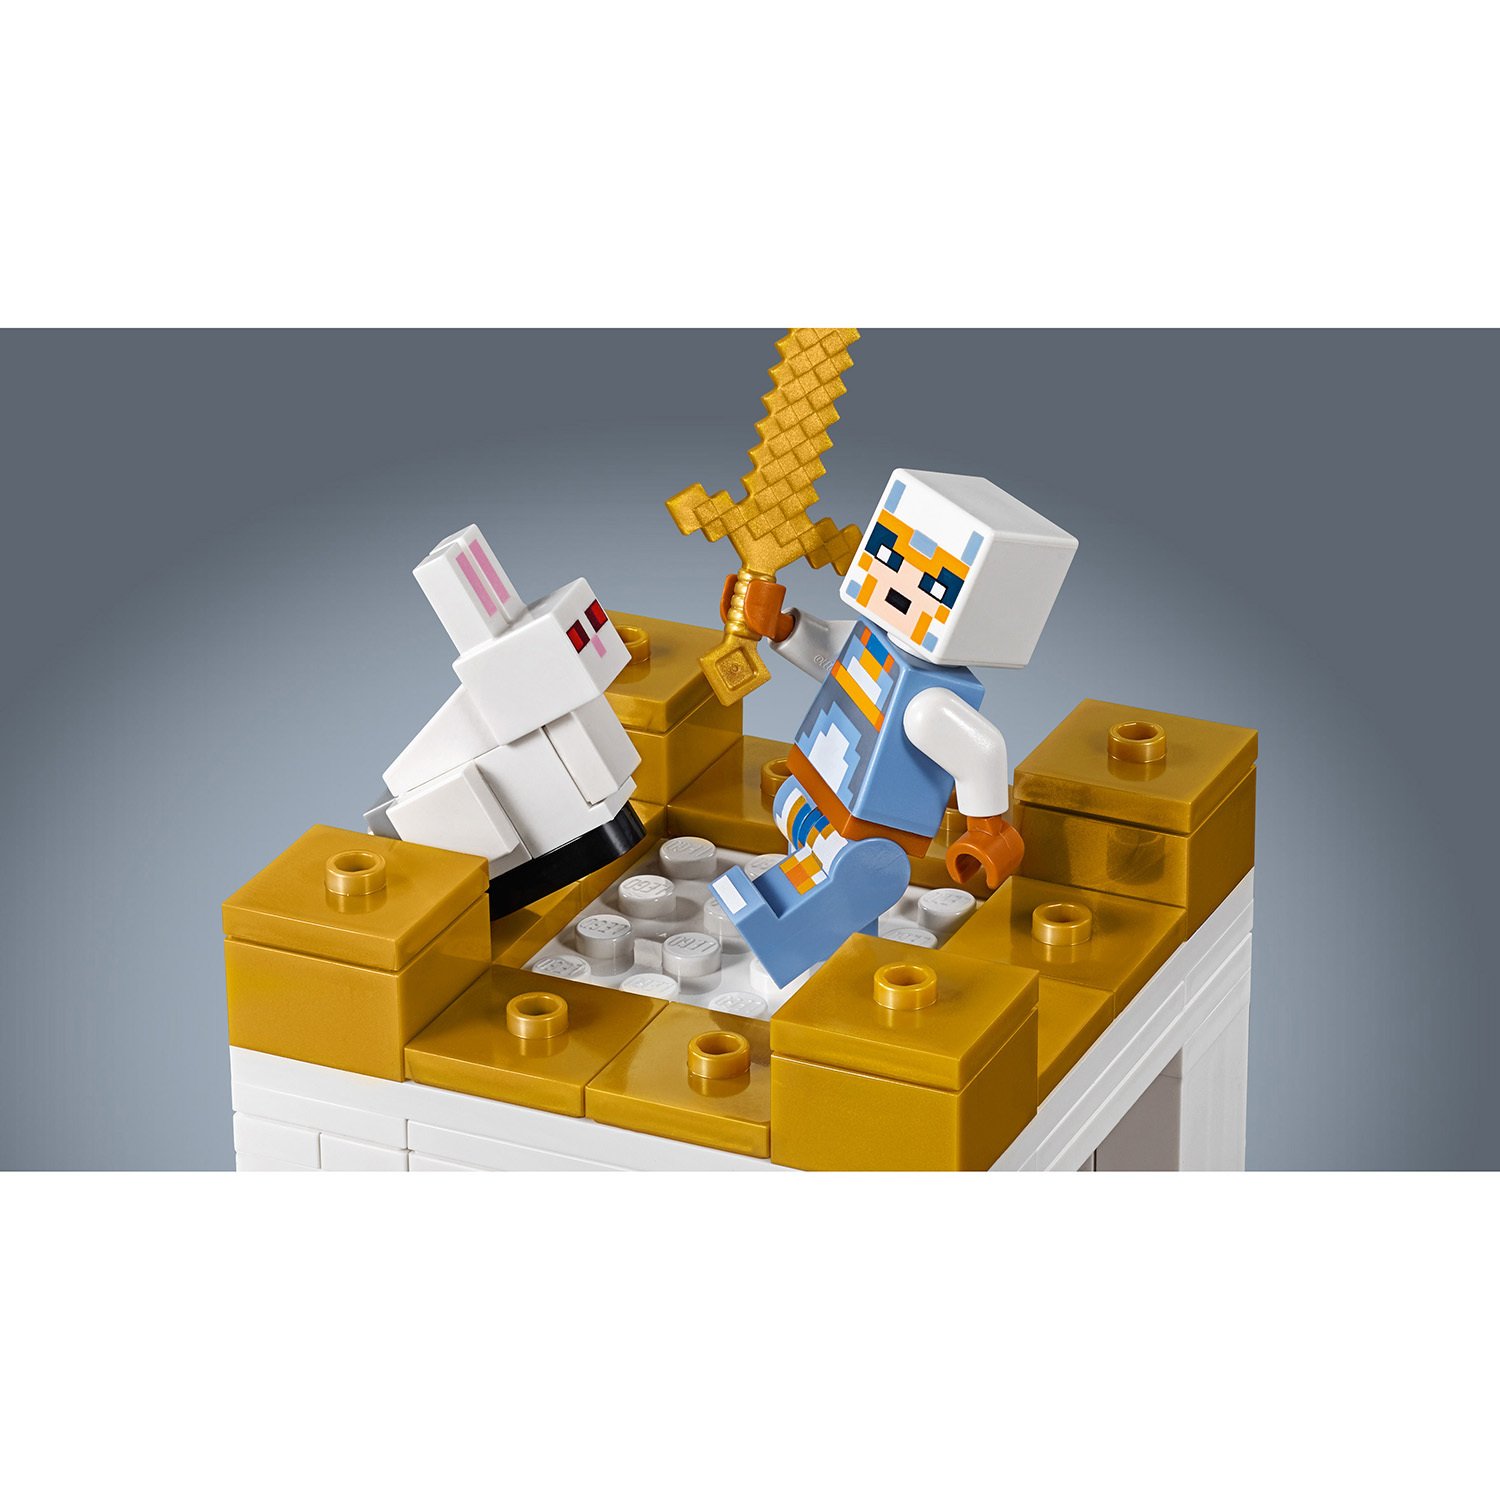 Конструктор LEGO Minecraft 21145 Арена-череп